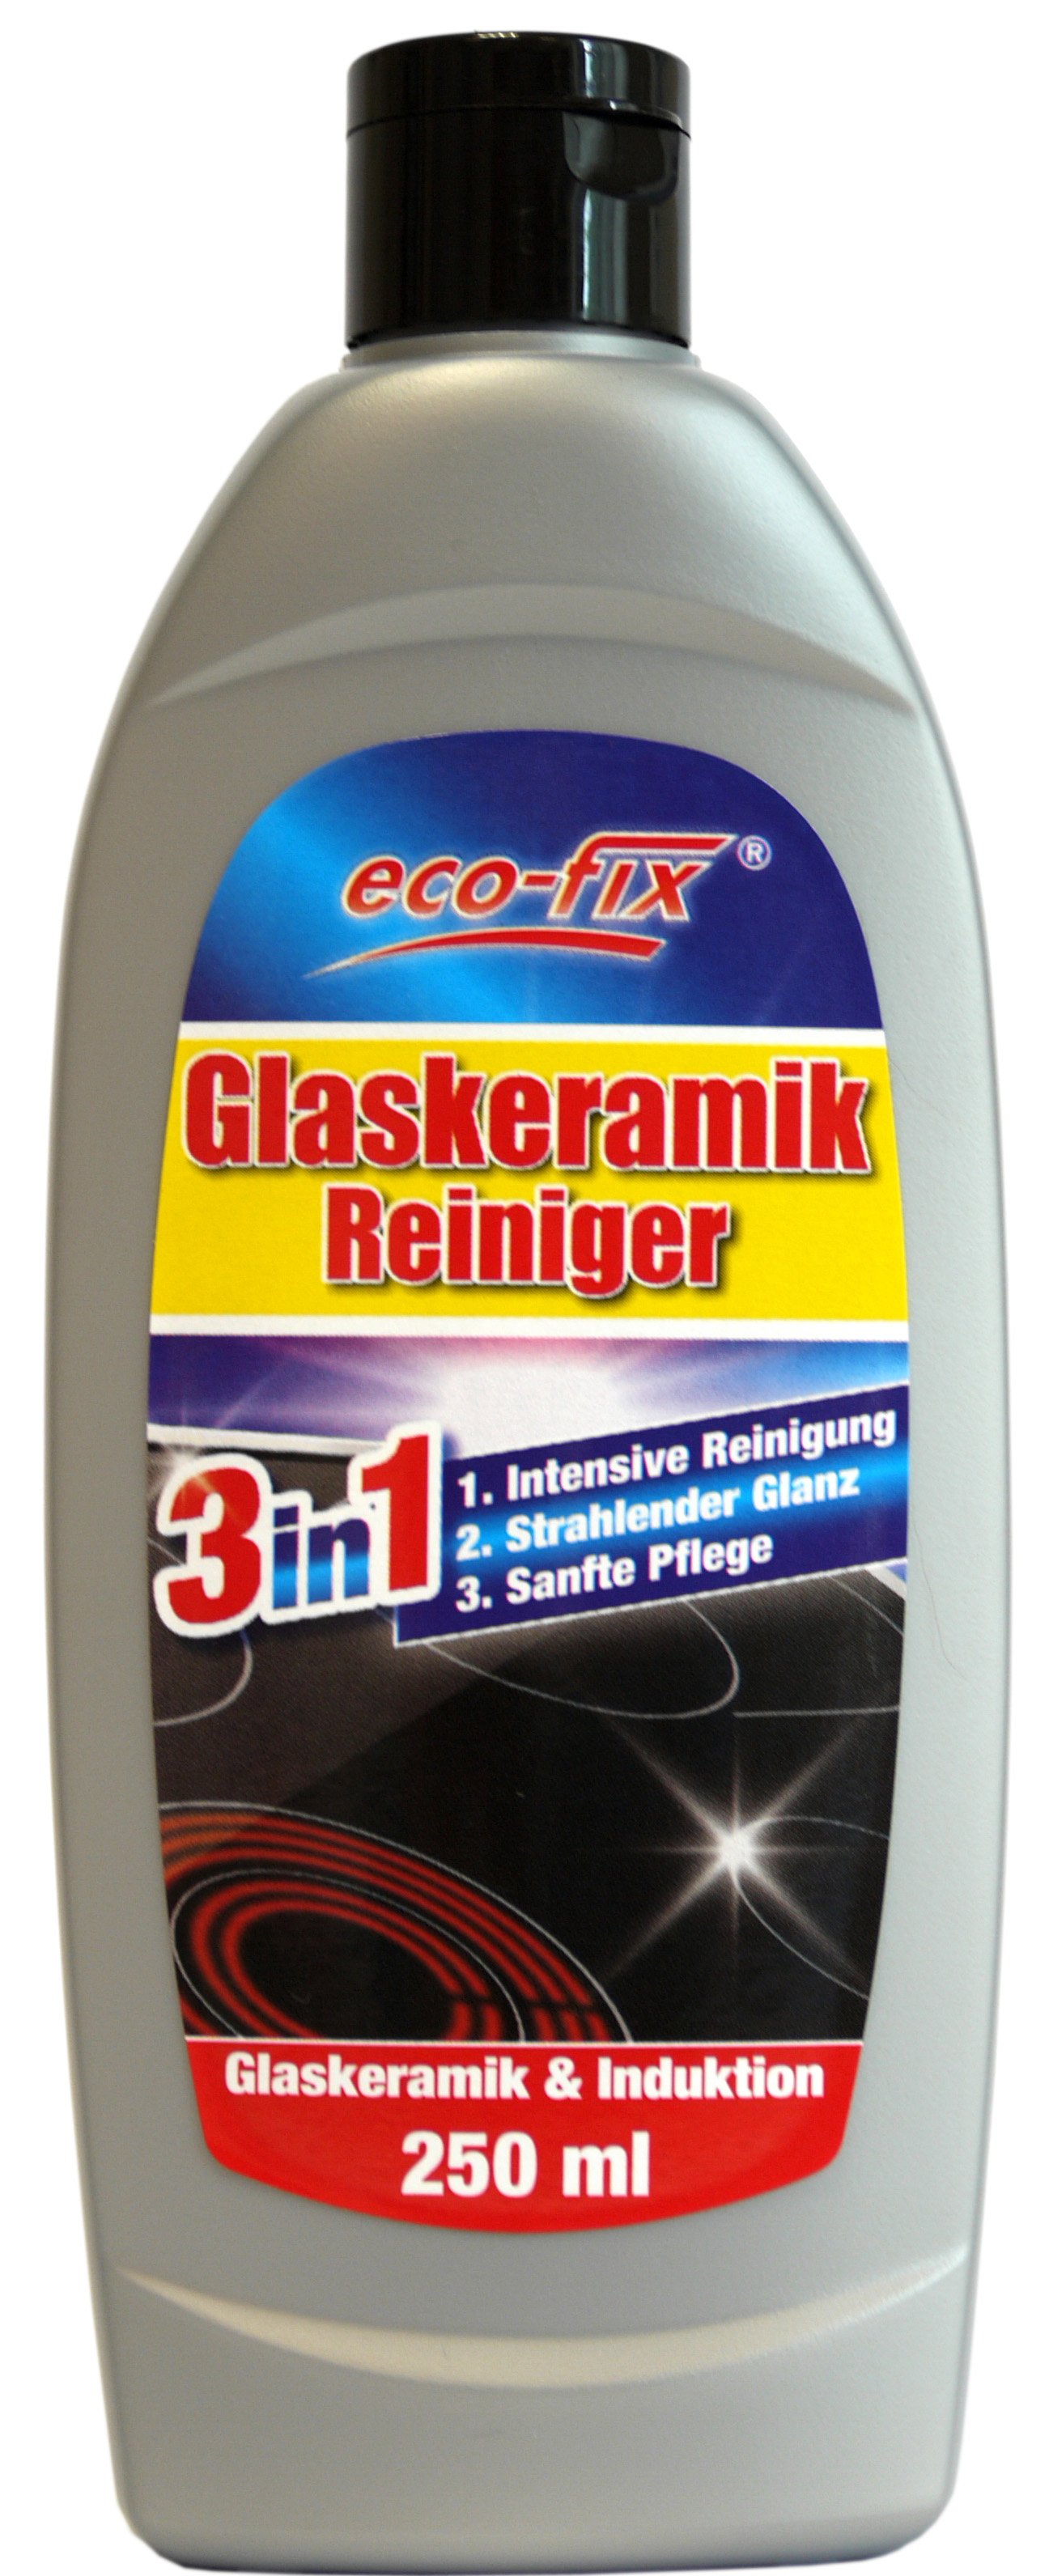 02465 - glass ceramic cleaner 250 ml